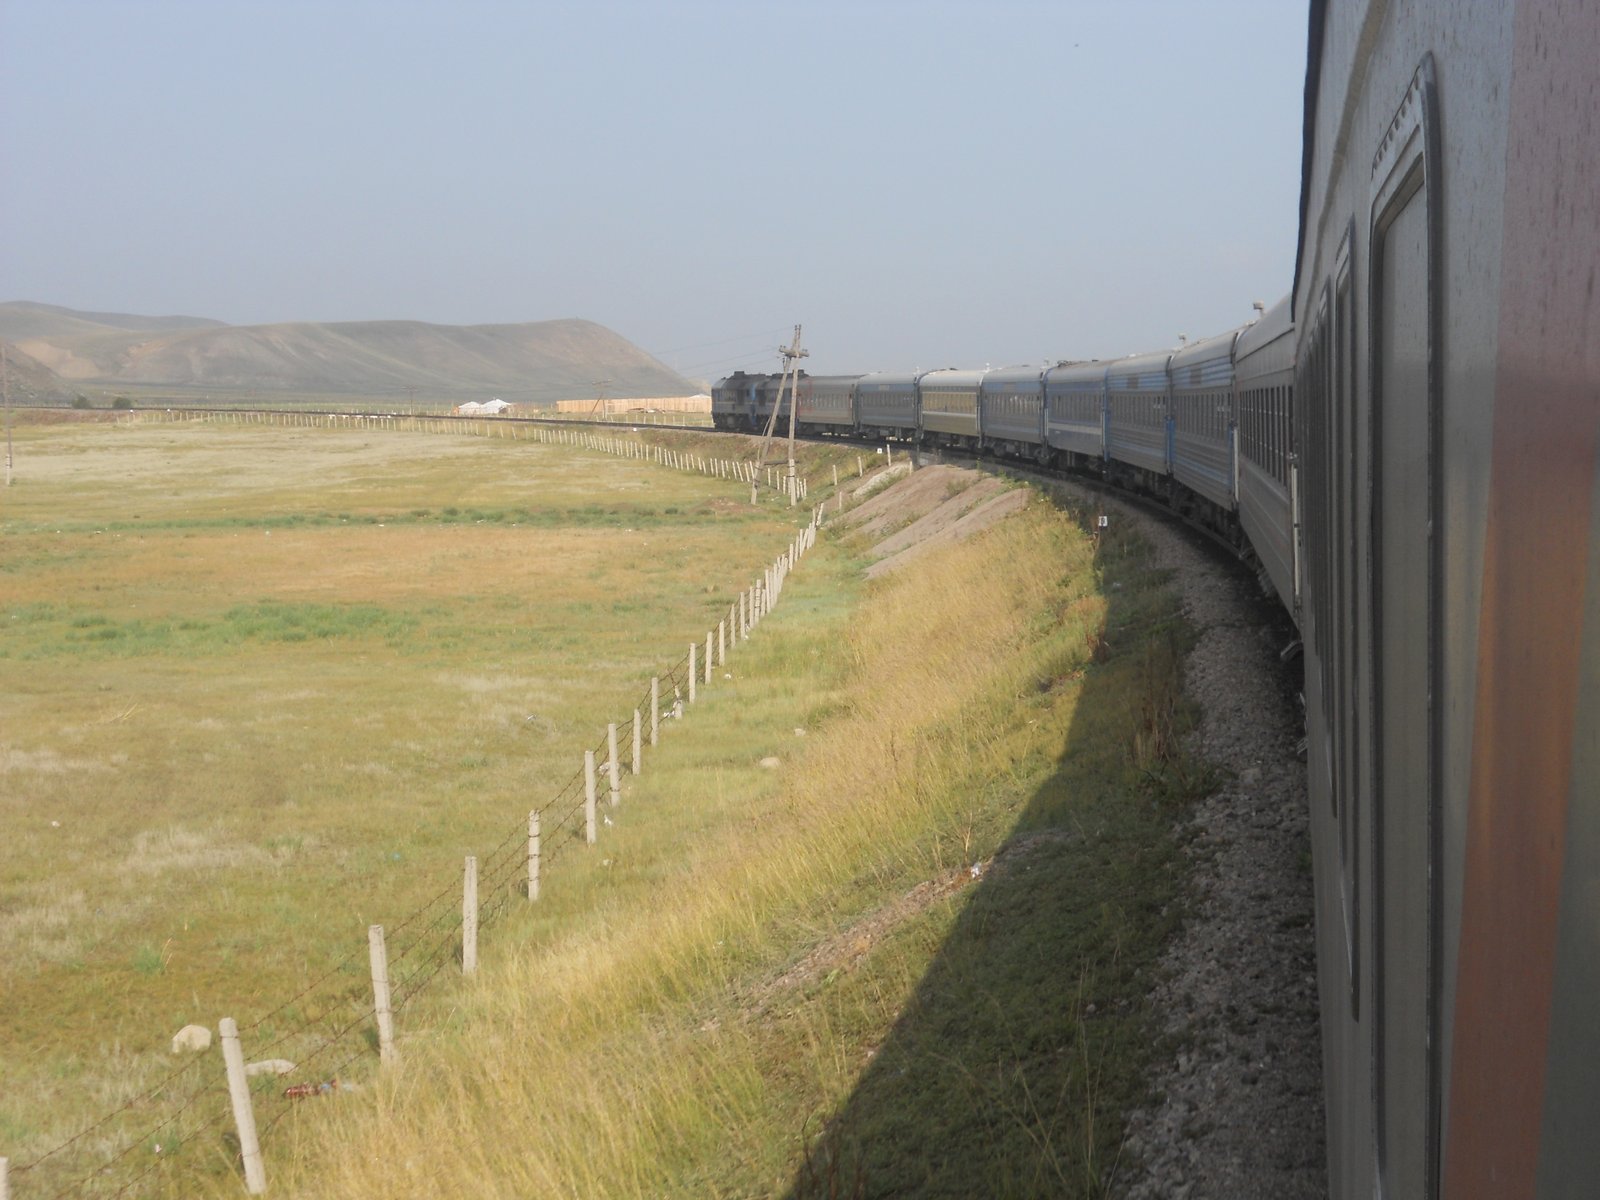 ASIA: Aventura en el legendario “Tren de los Zares”de Pekin a Moscú pasando por Mongolia